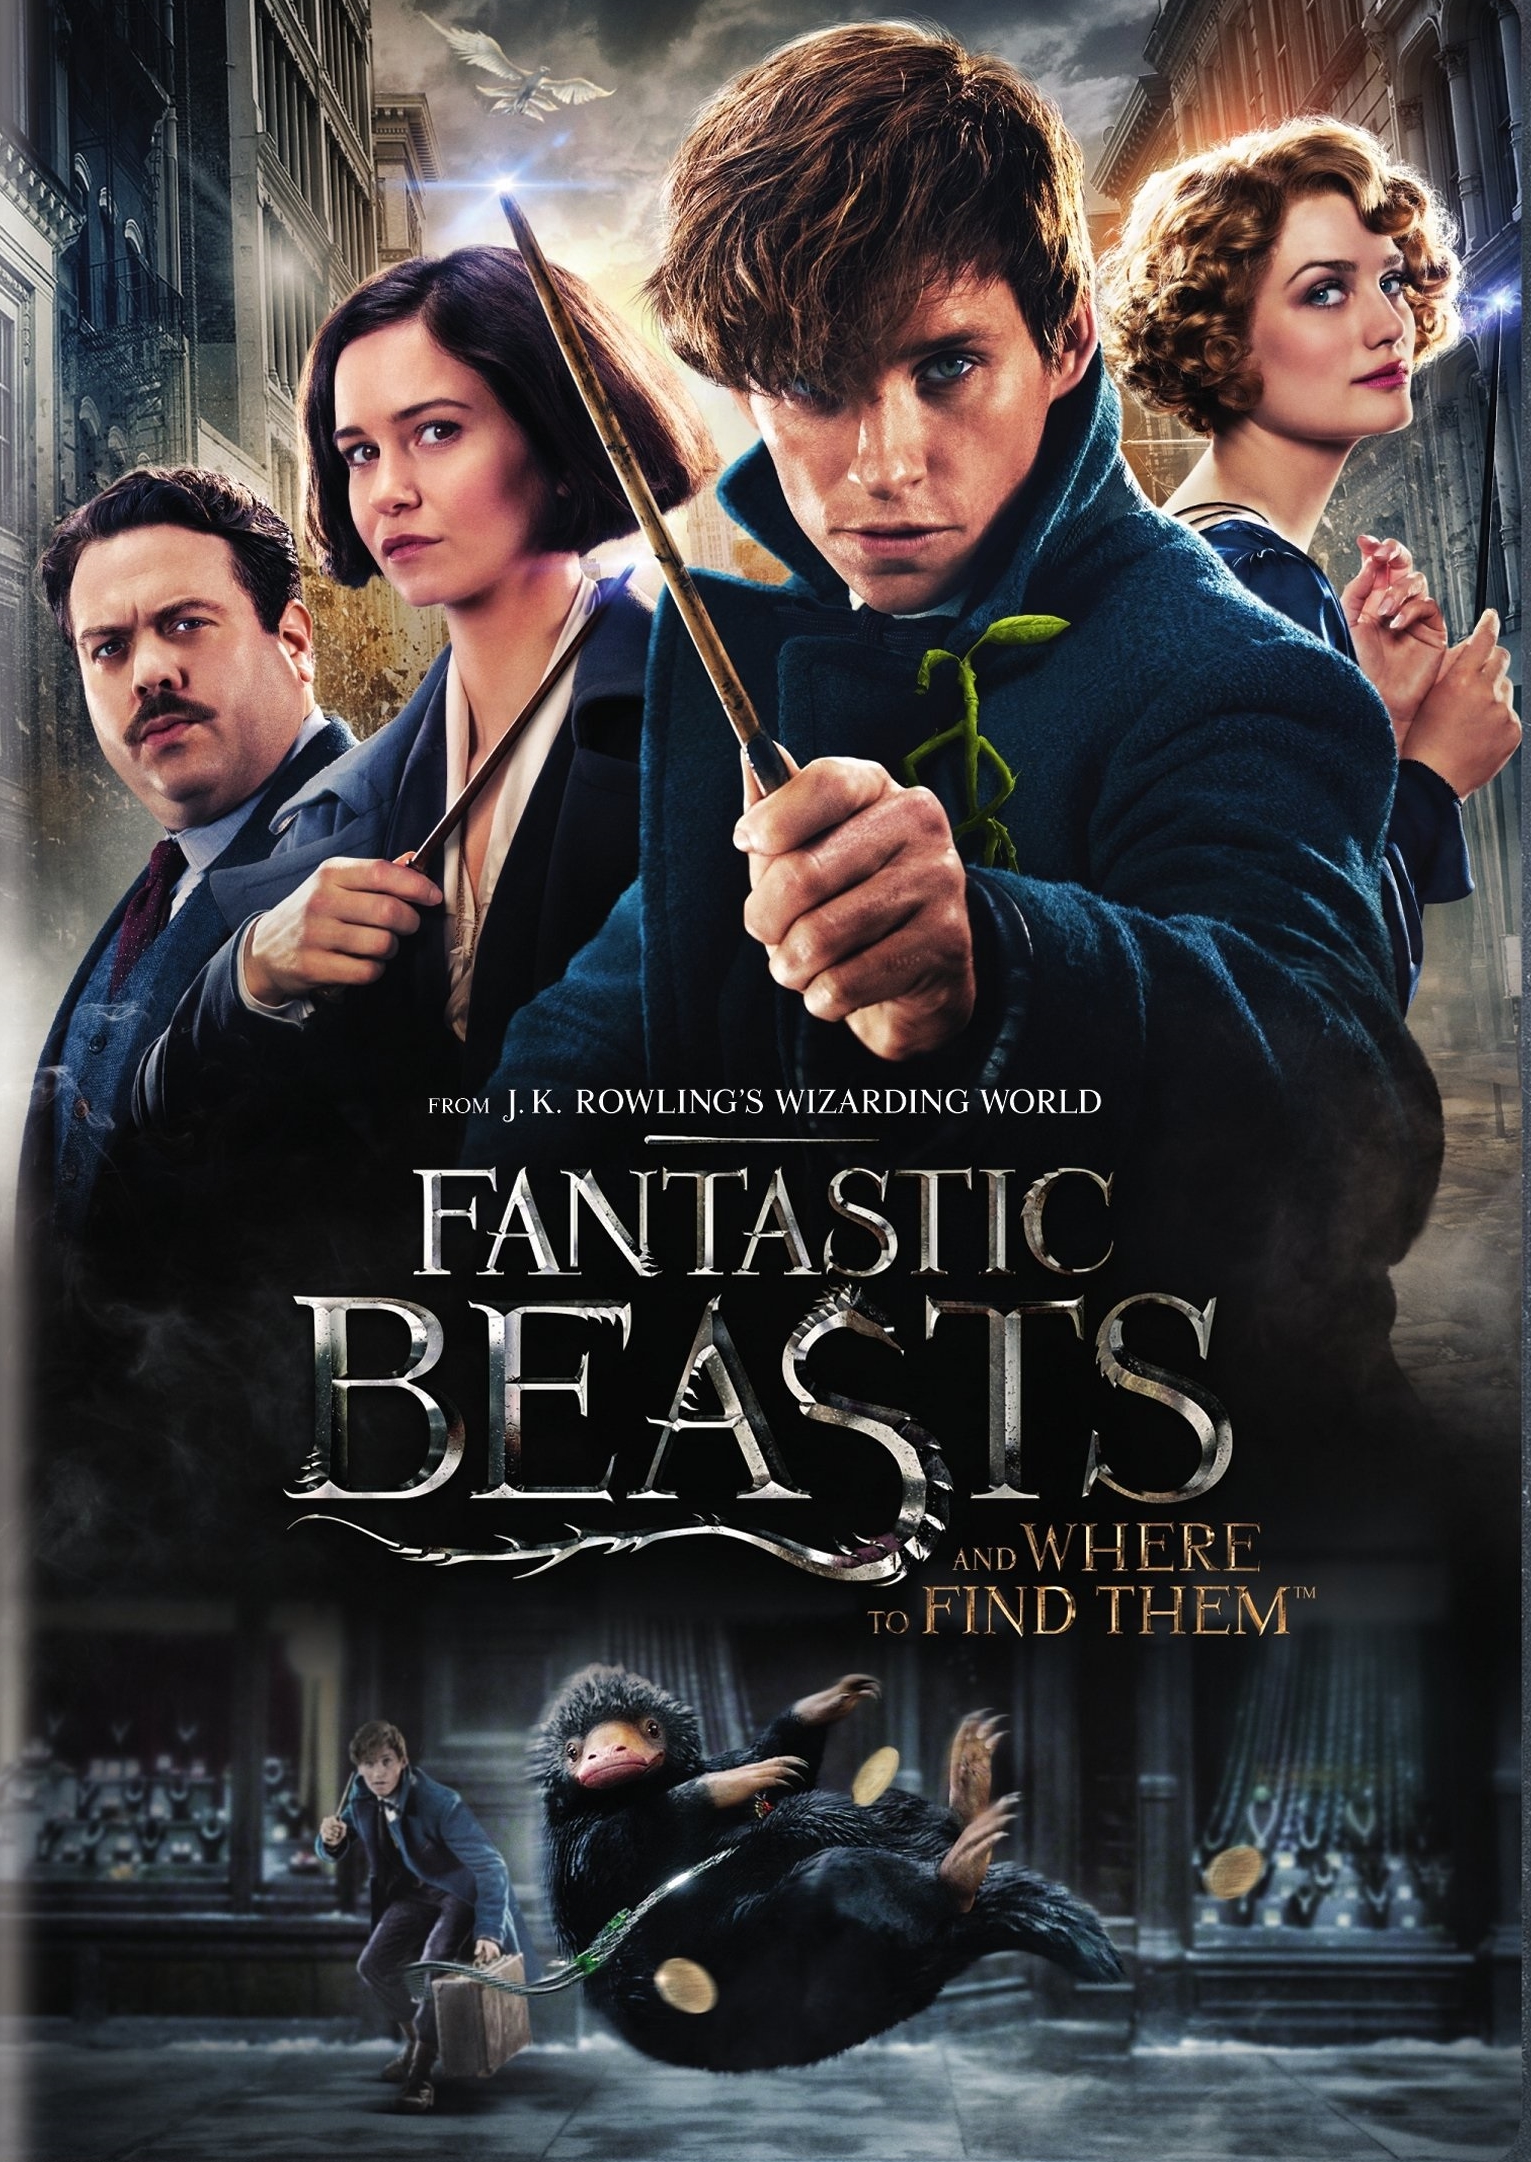 Fantasstic Beasts 1 Poster